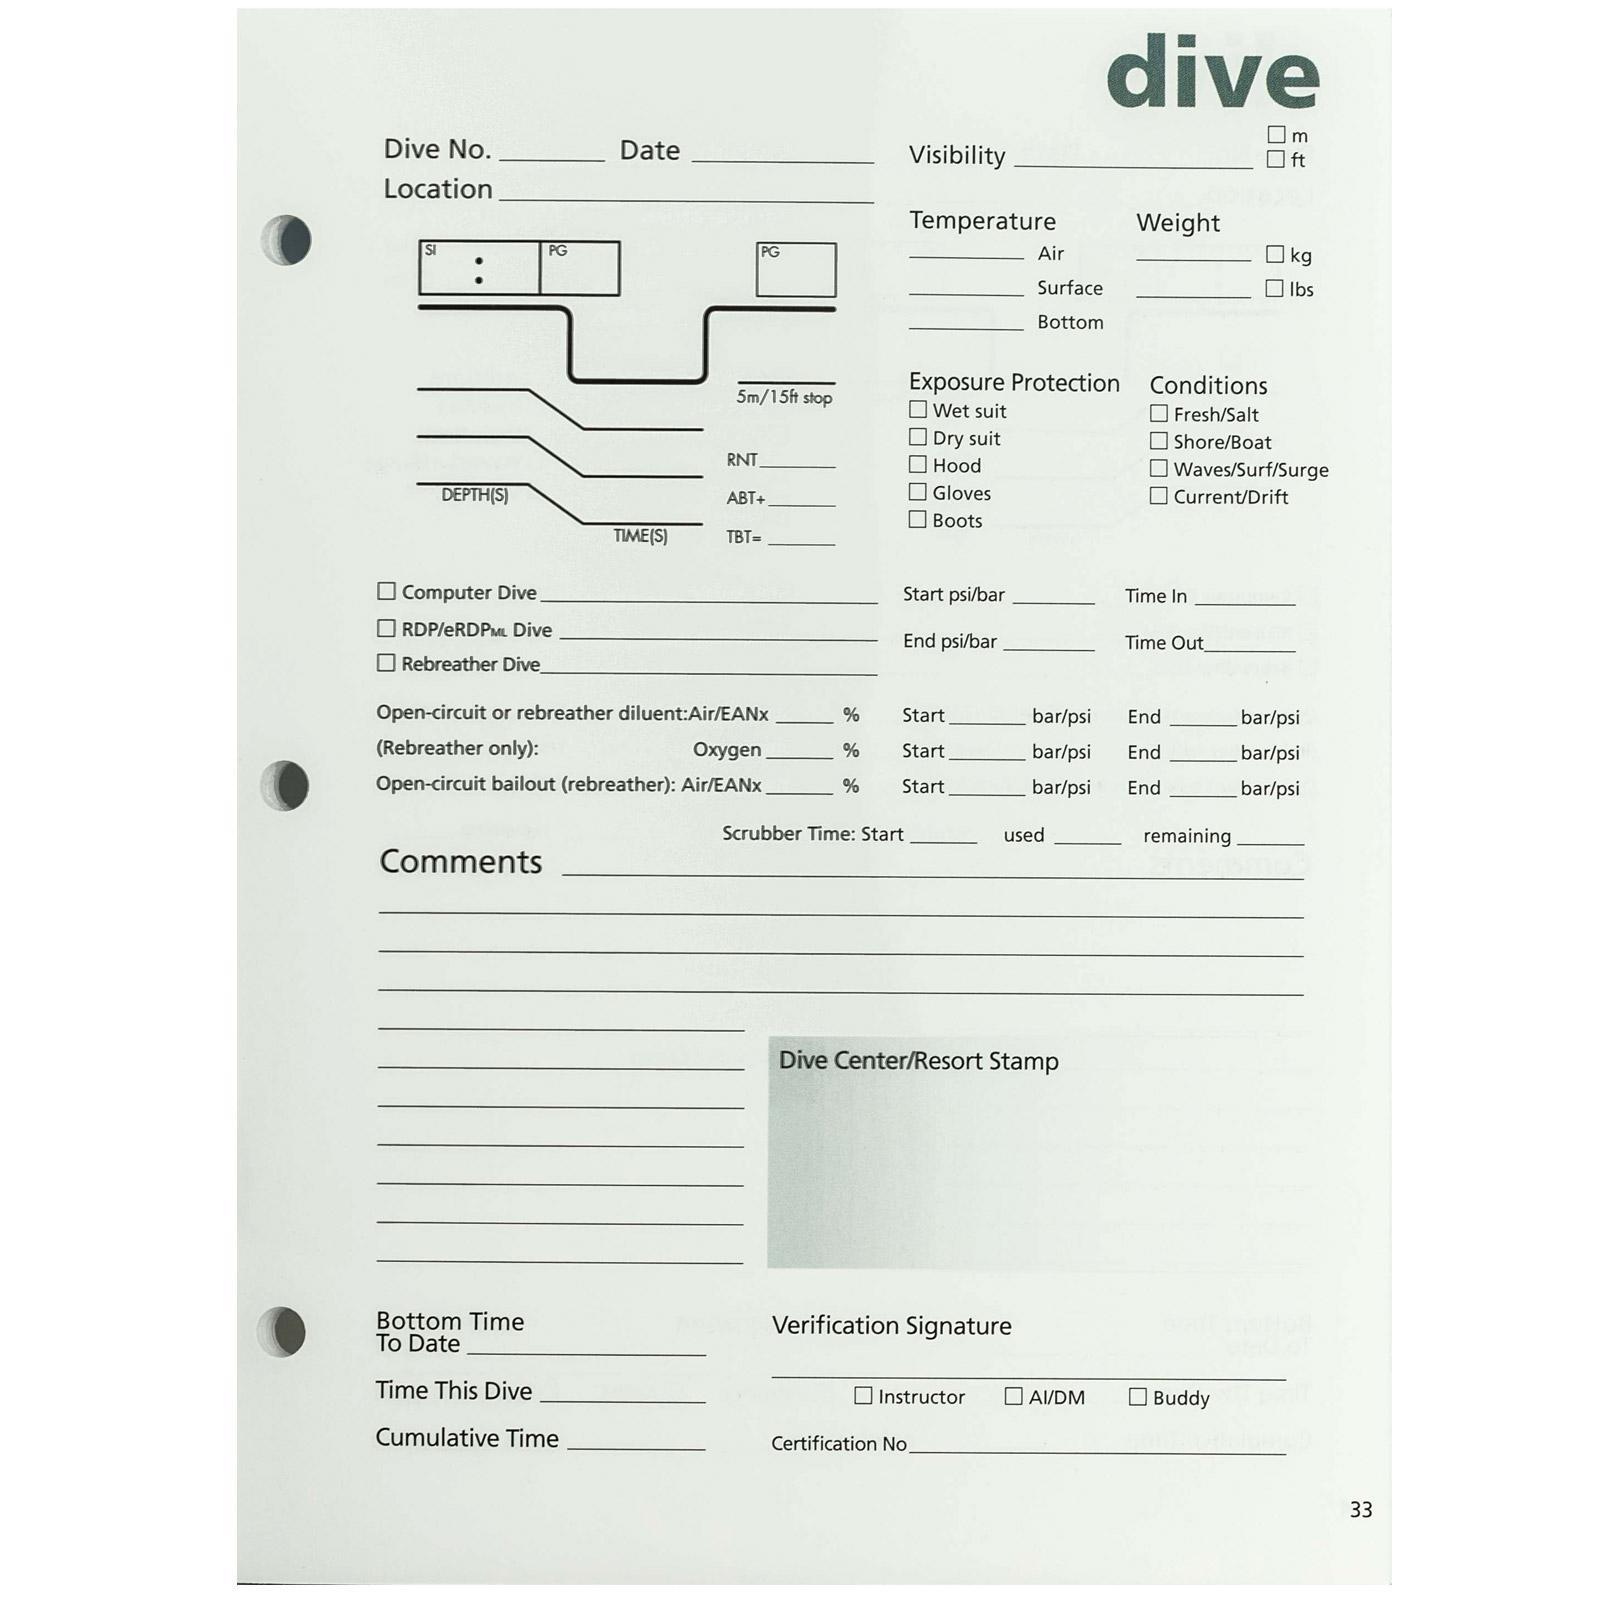 Dive Log Software Reviews